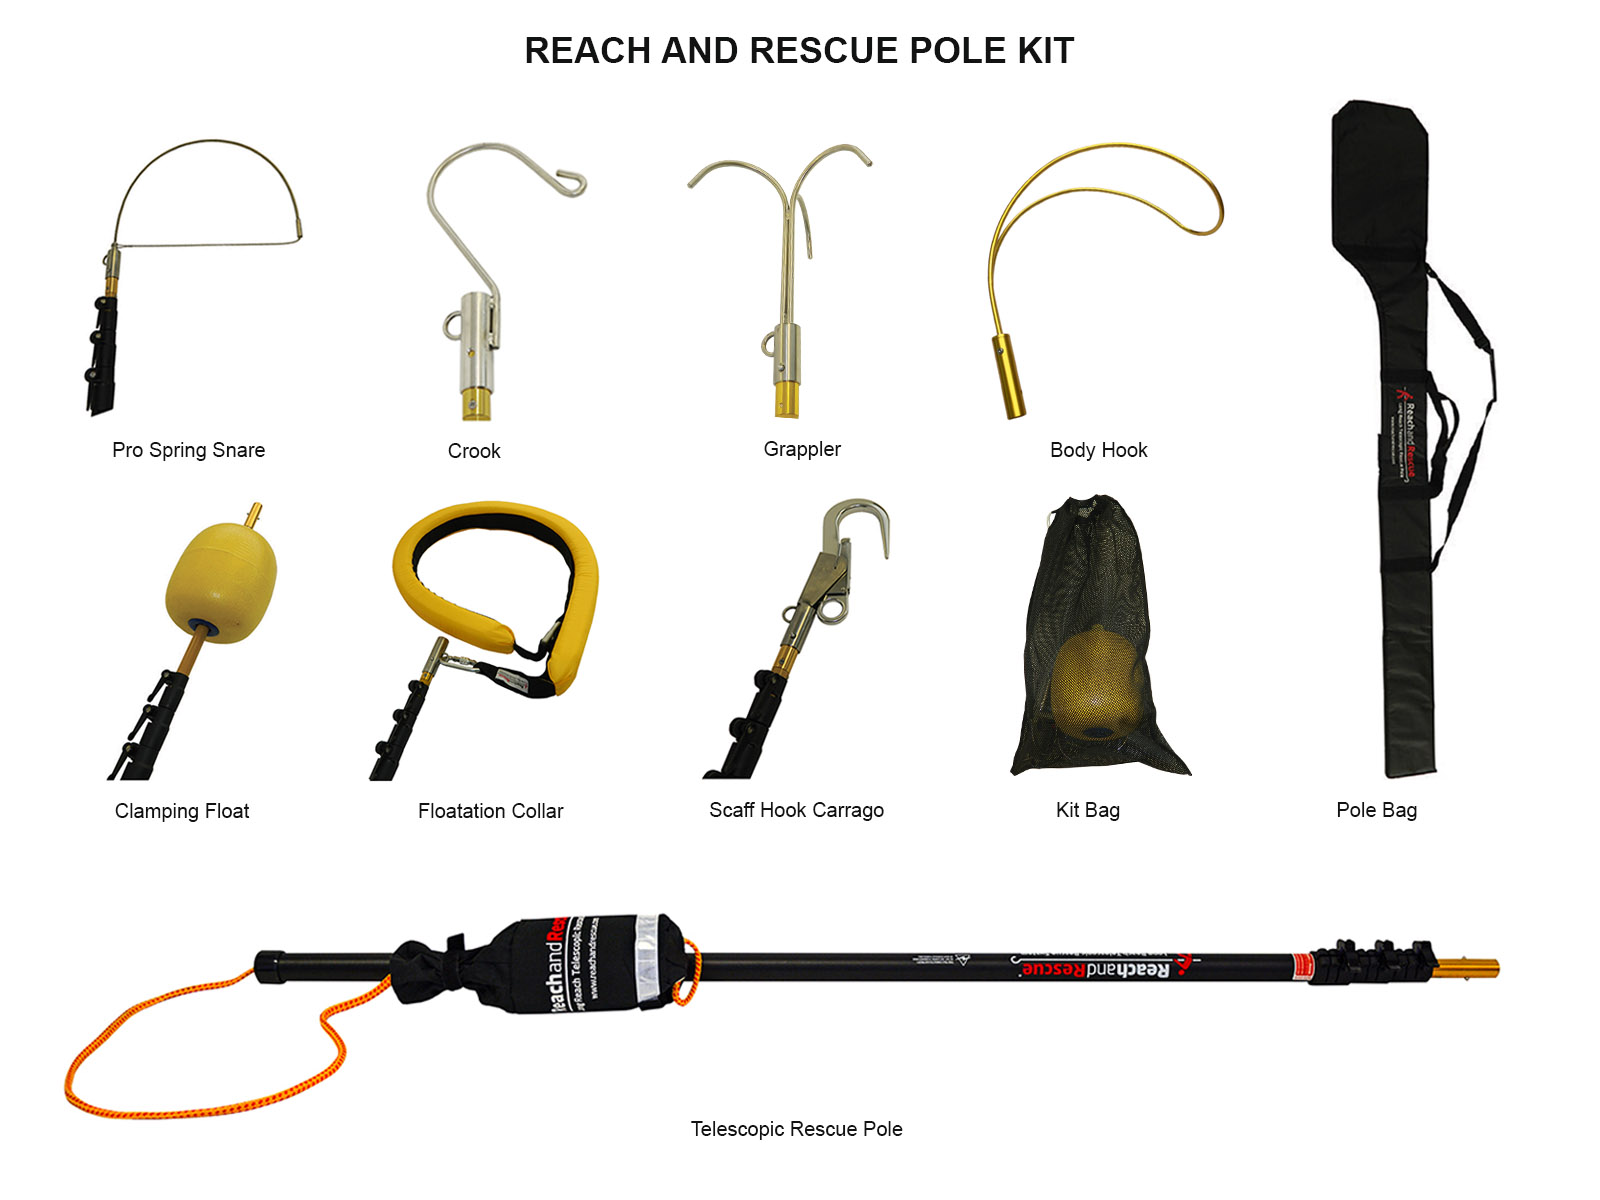 RRUKP-Reach-and-Rescue-Pole-Kit_1.jpg